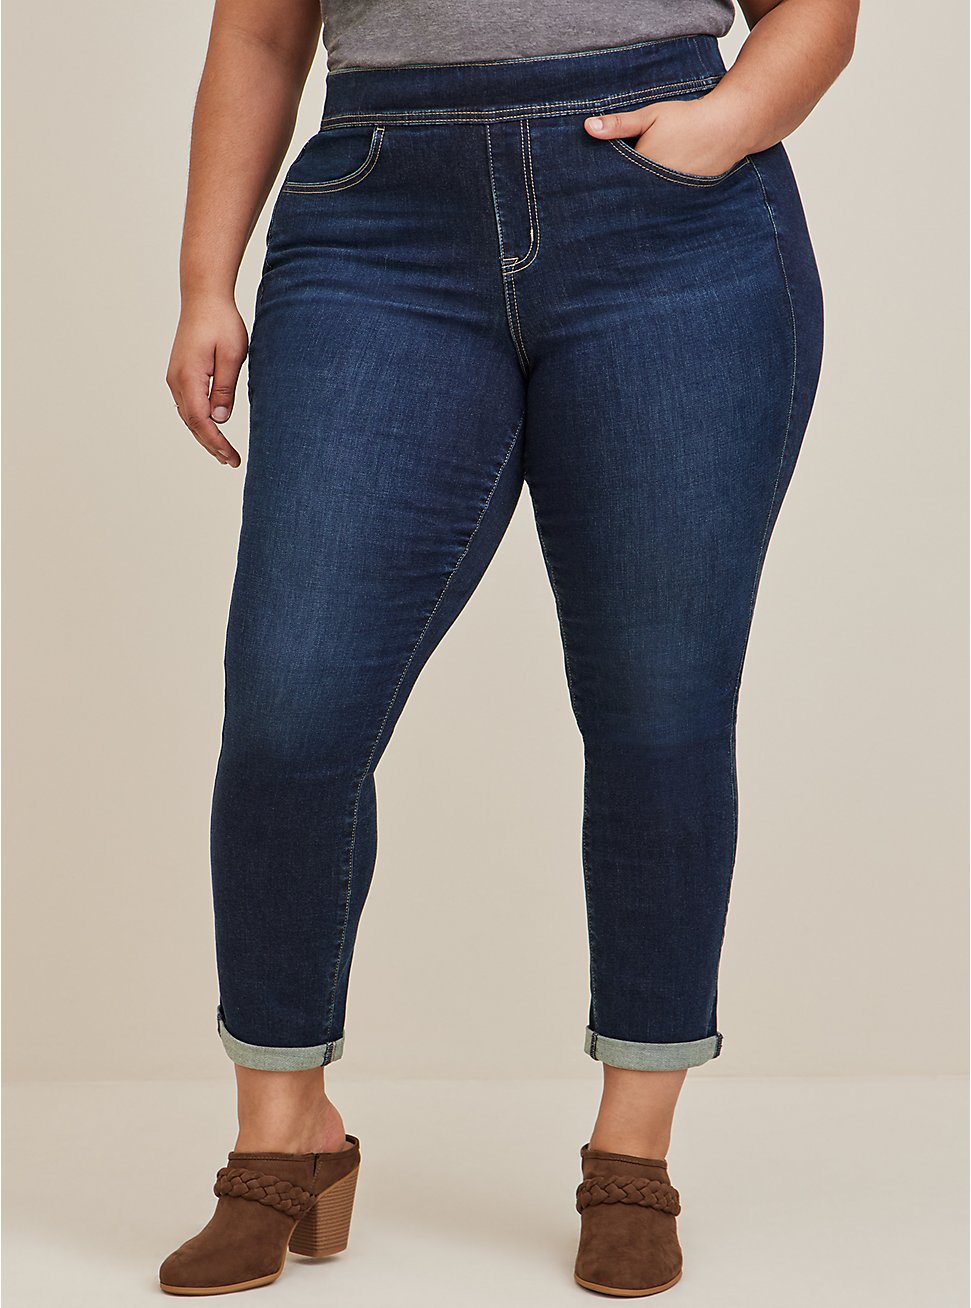 Plus Size High-Rise Straight Lean Jean - Super Soft Denim, , hi-res